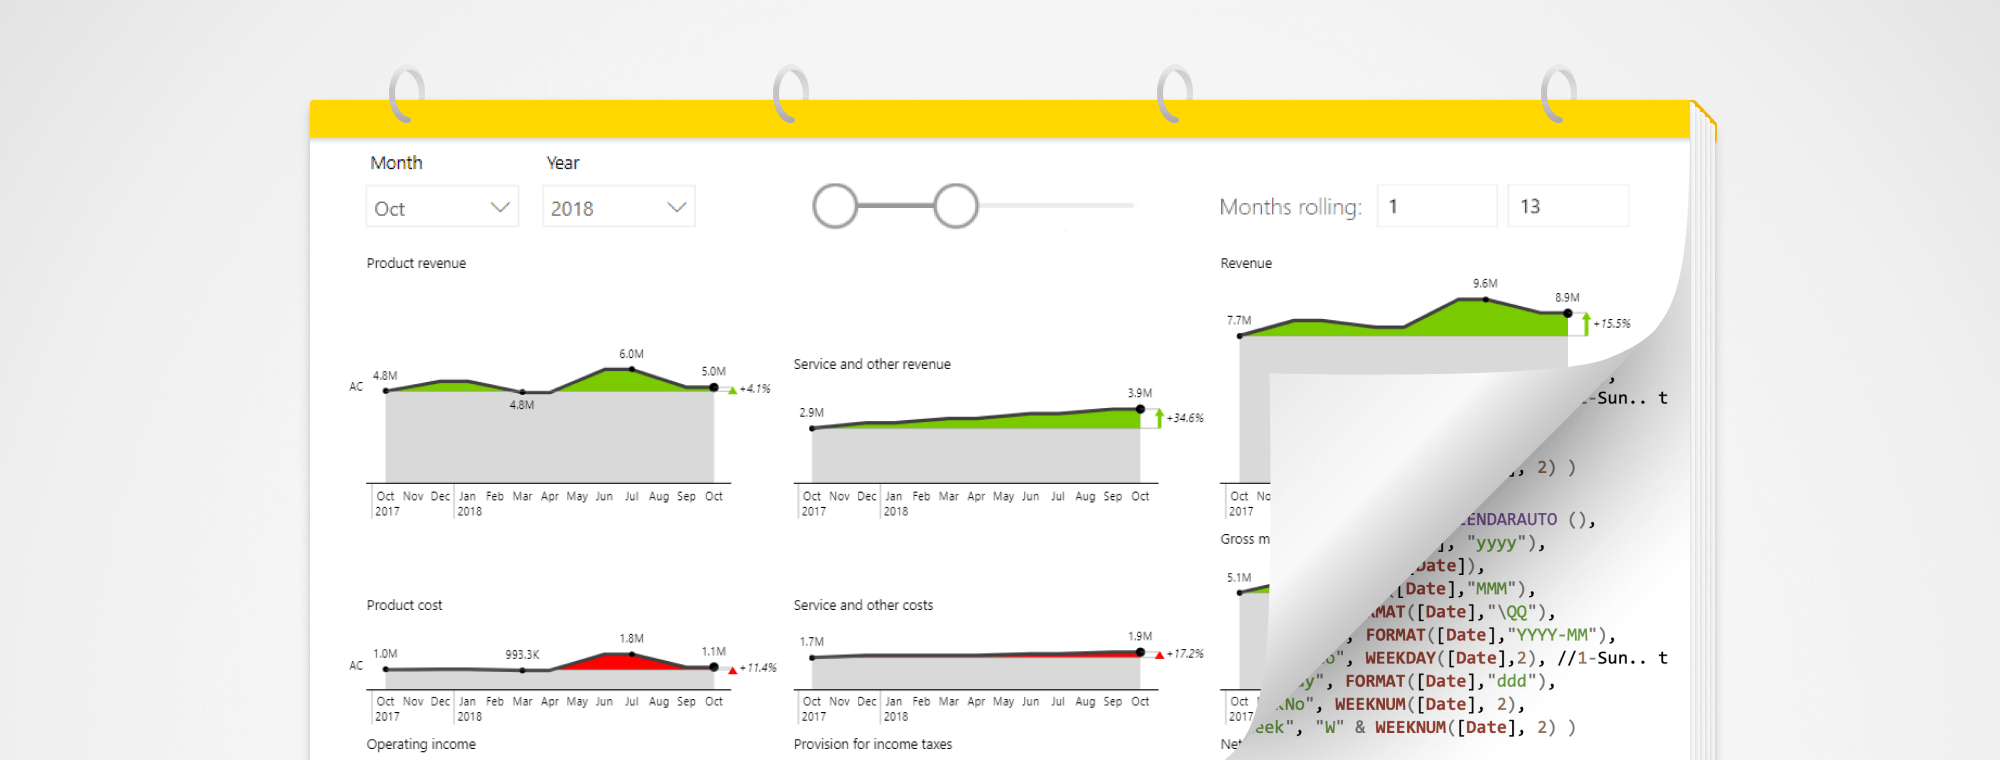 Time Series Analysis in Power BI using Timeline Visual